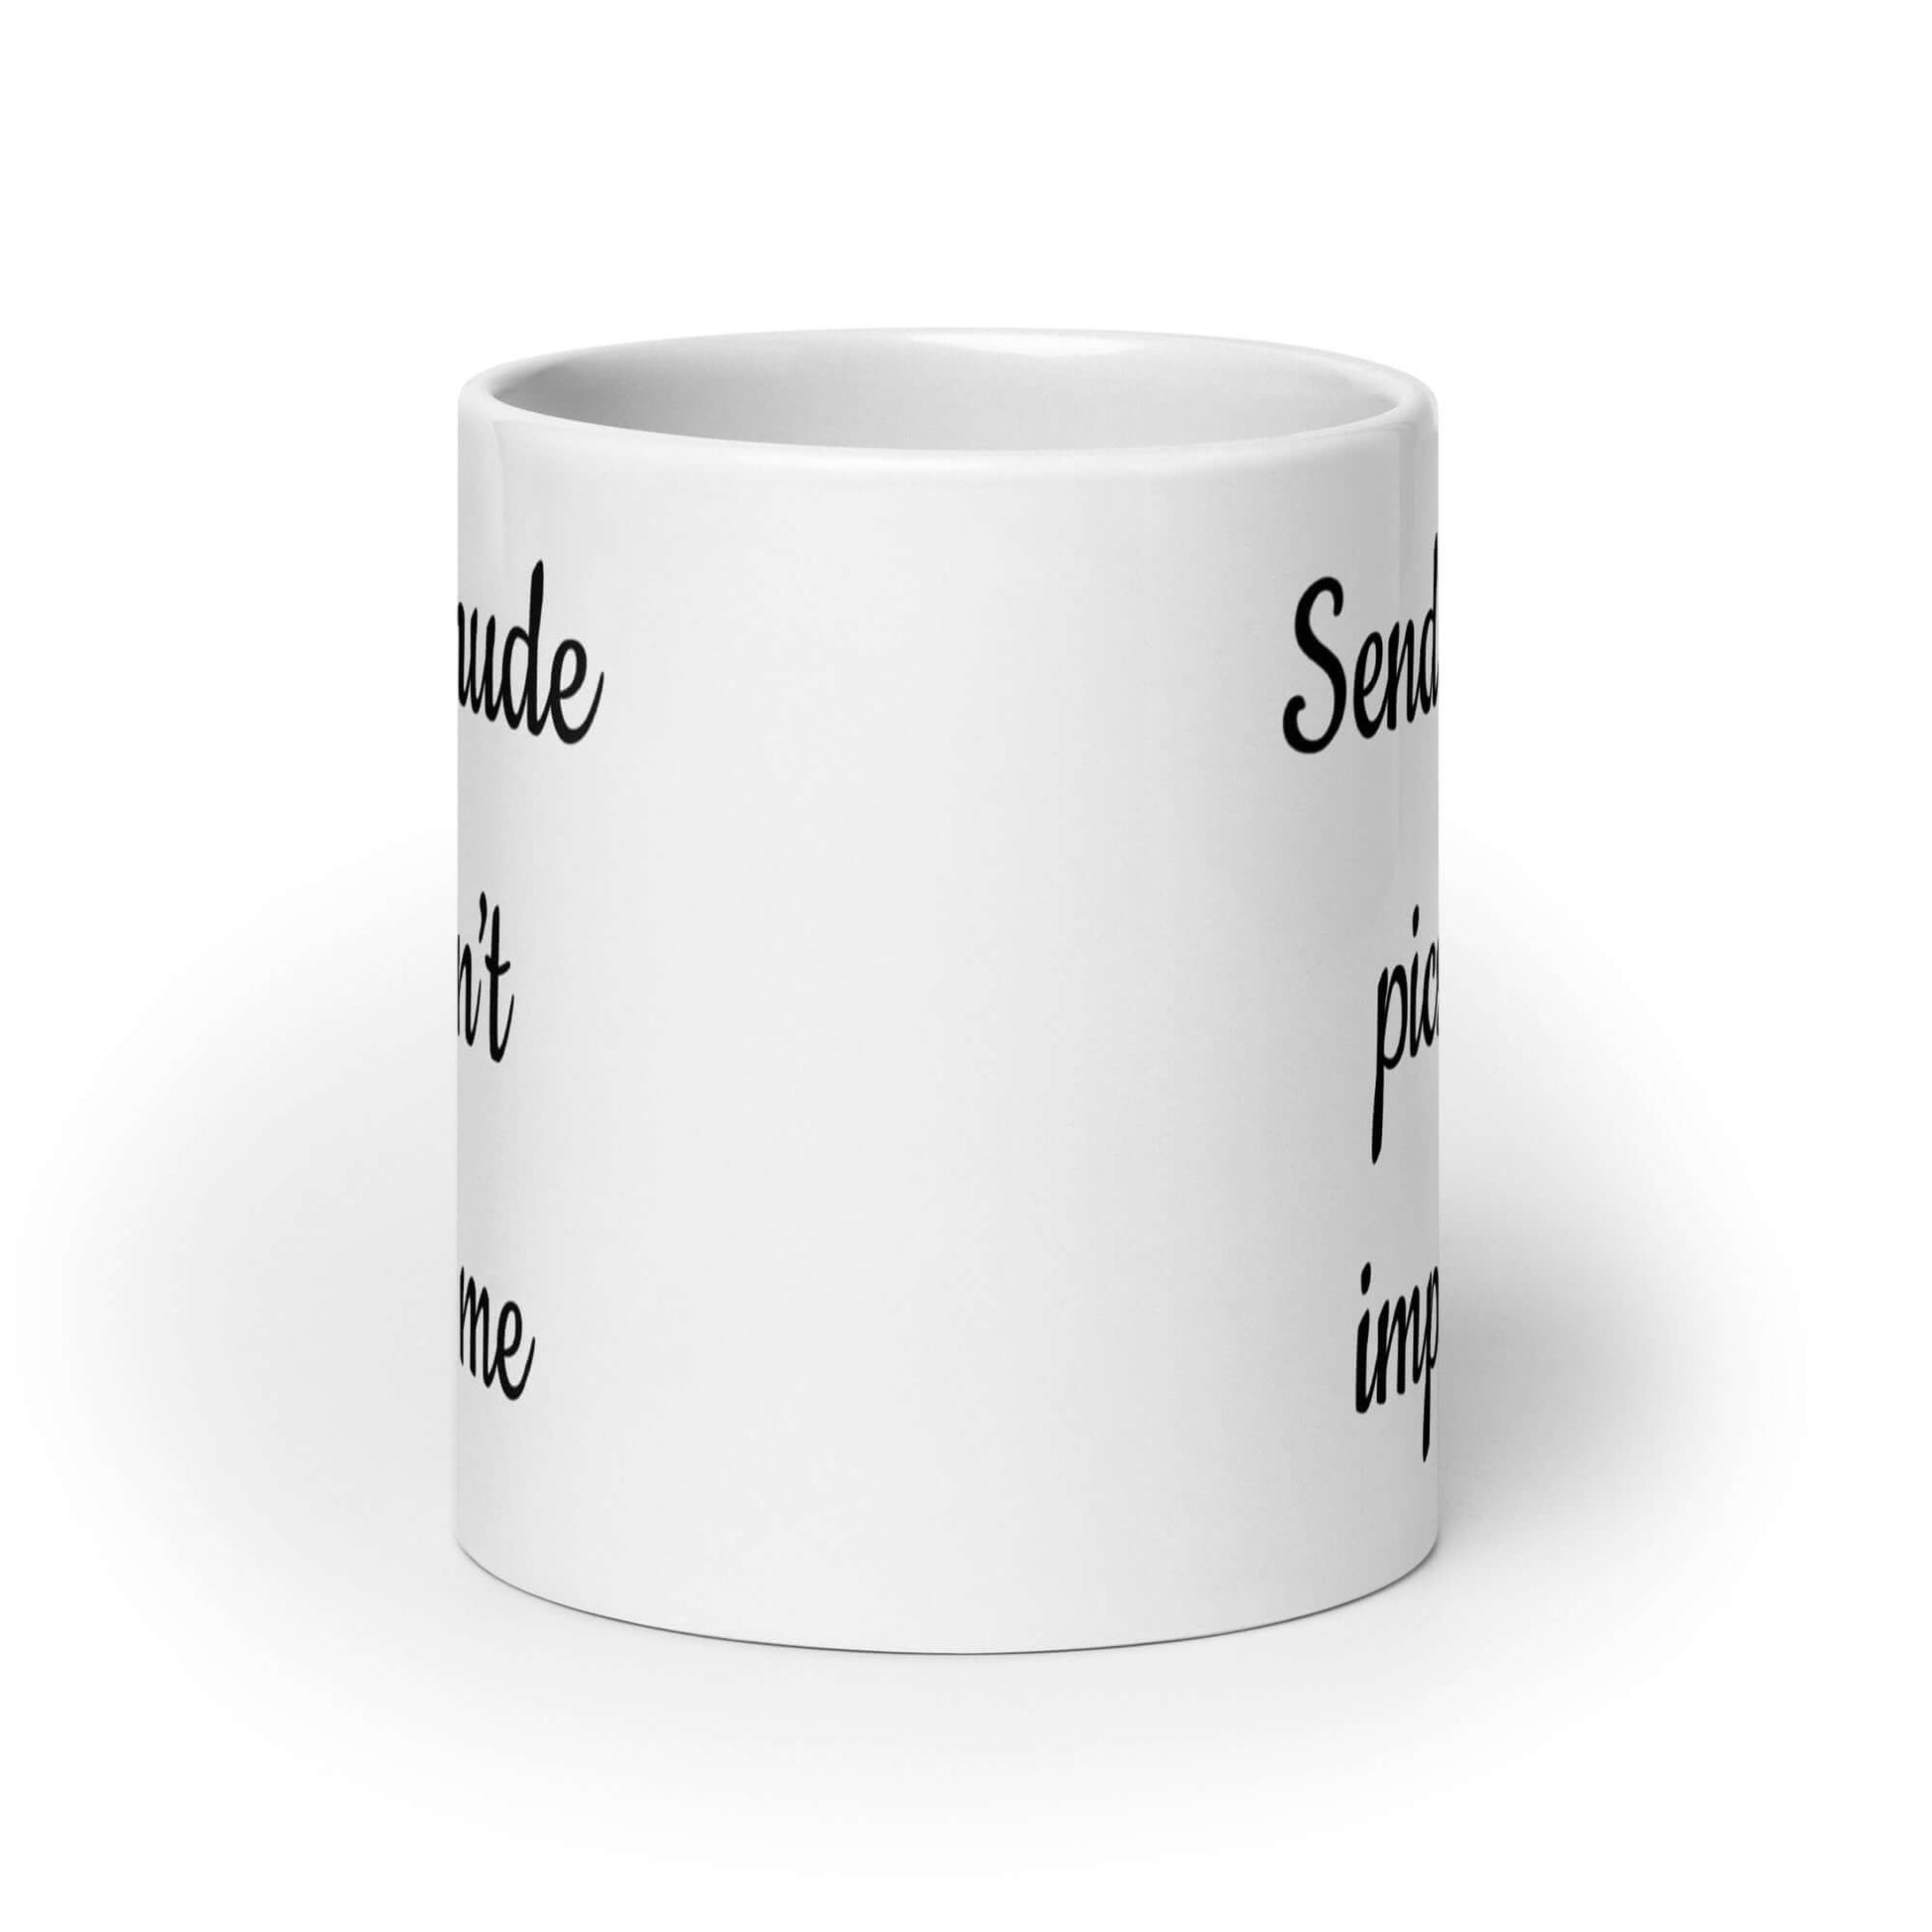 White ceramic coffee mug with the phrase Sending nude pic won't impress me printed on both sides of the mug.